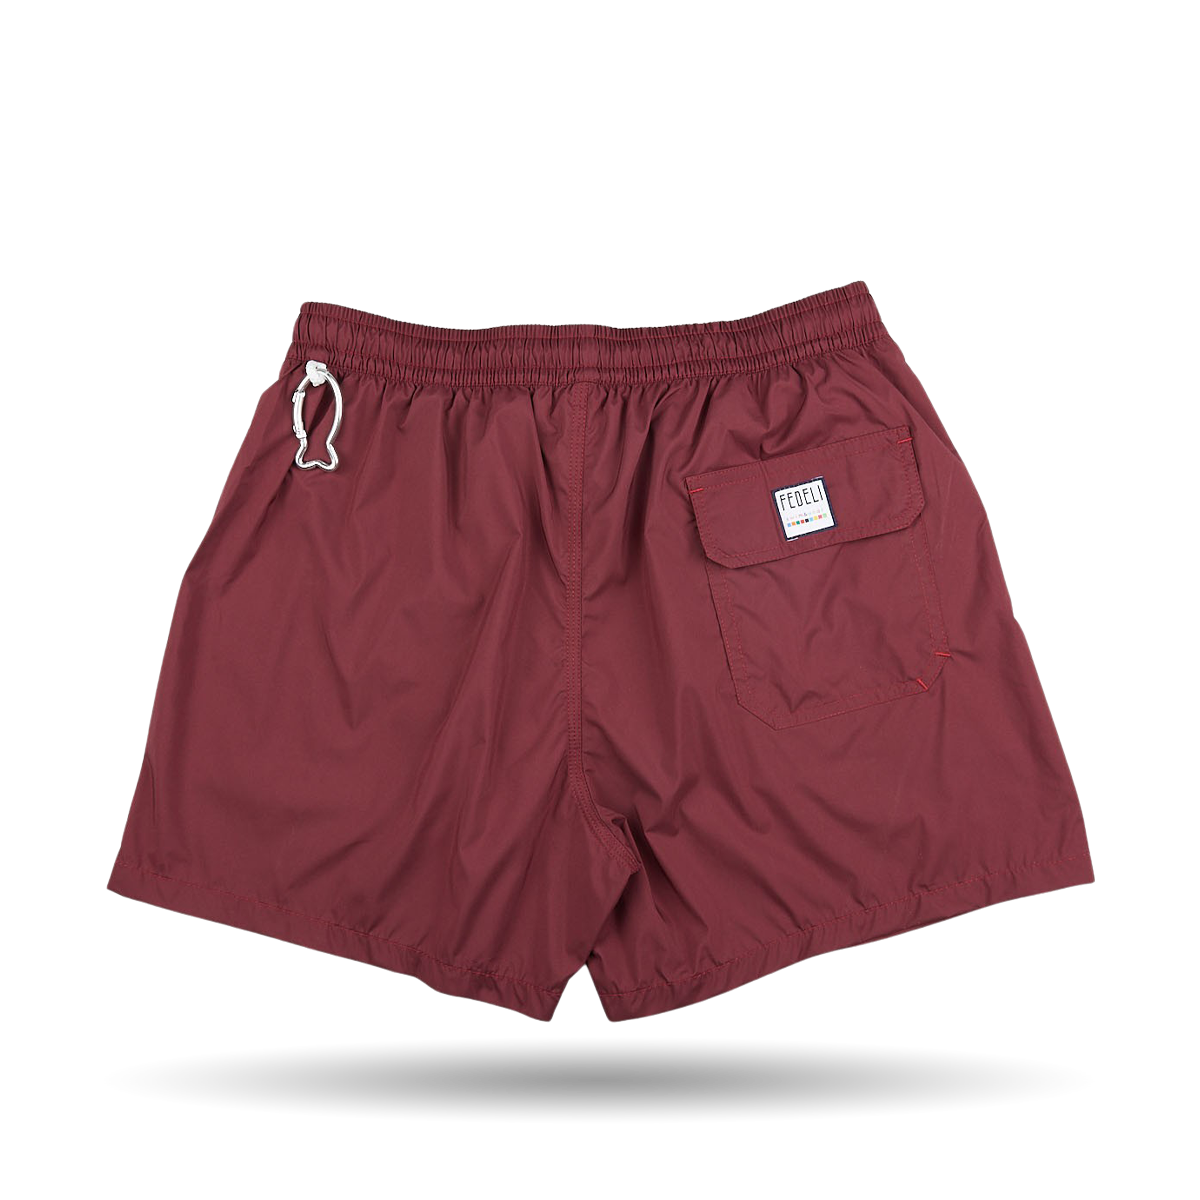 The Fedeli Wine Red Microfiber Madeira Swim Shorts are men's luxury casual wear.